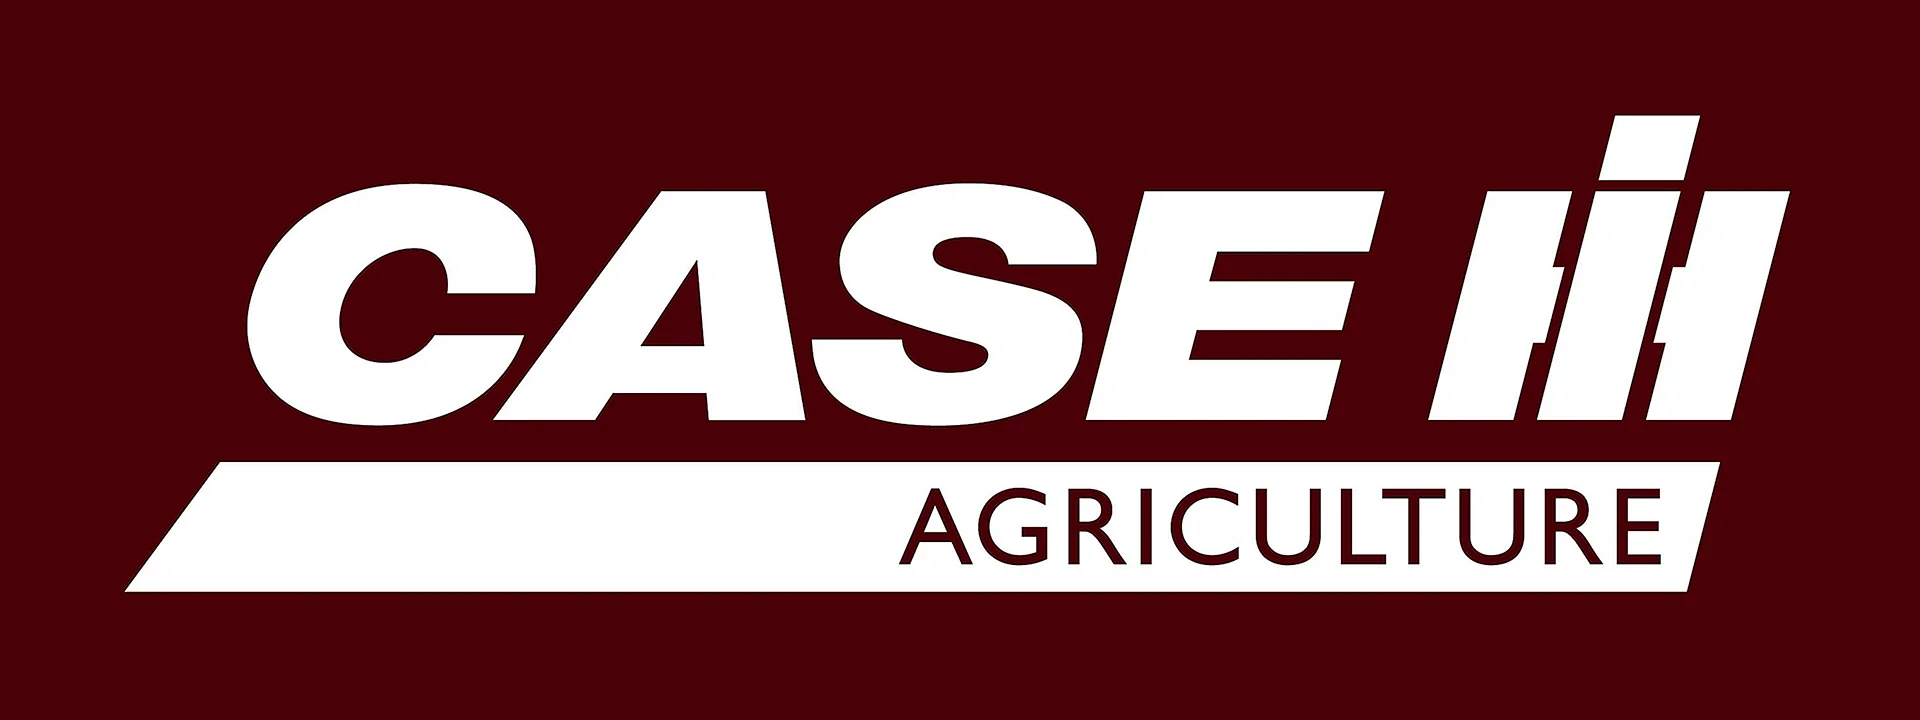 Case Agriculture logo Wallpaper